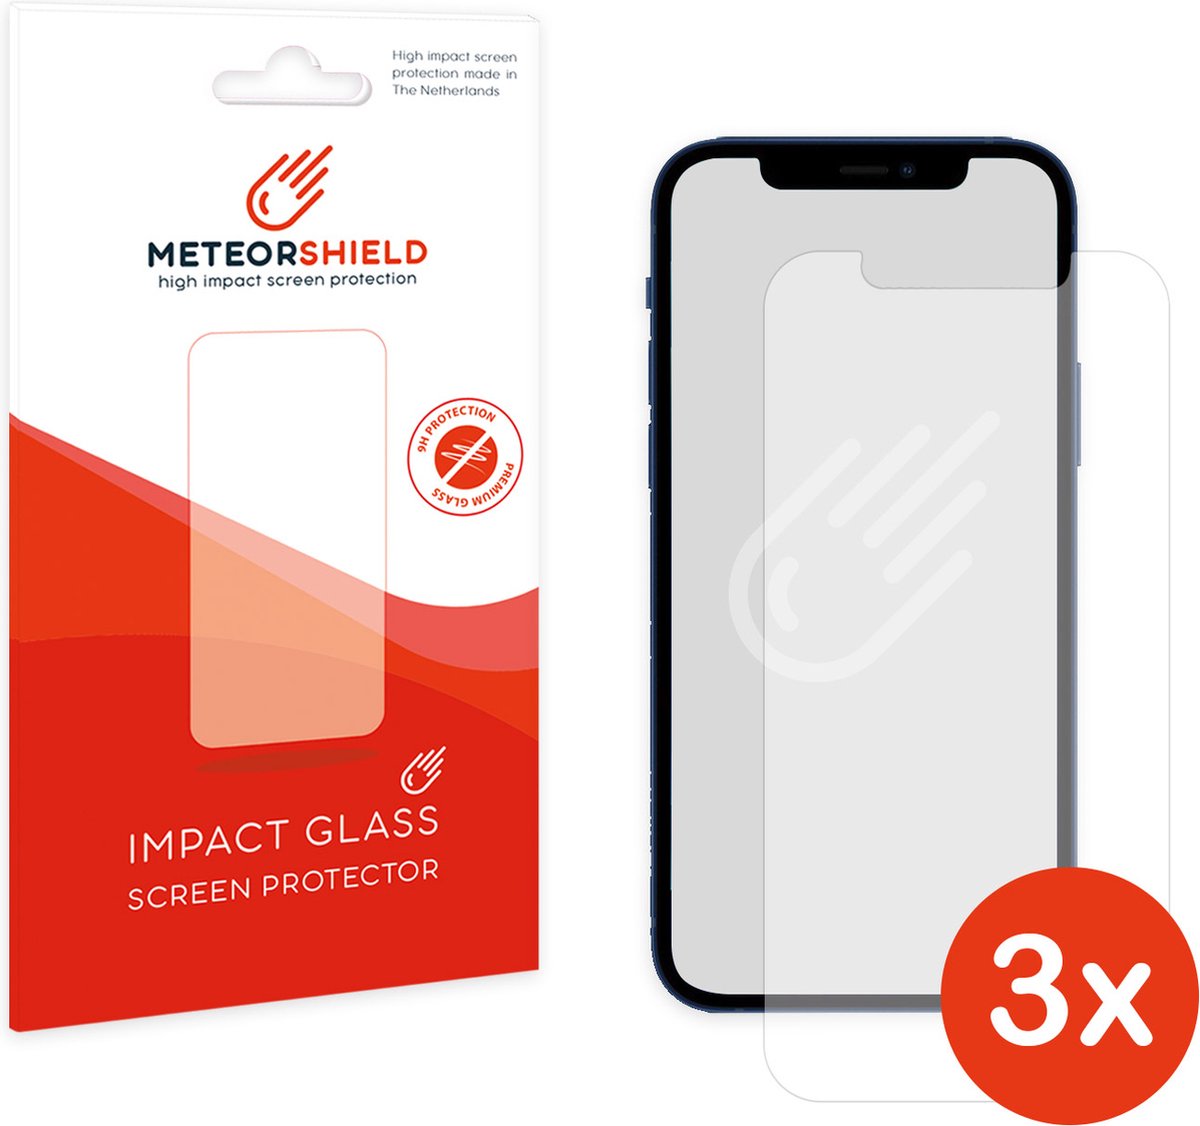 3 stuks: Meteorshield iPhone 12 Pro Max screenprotector - Ultra clear impact glass